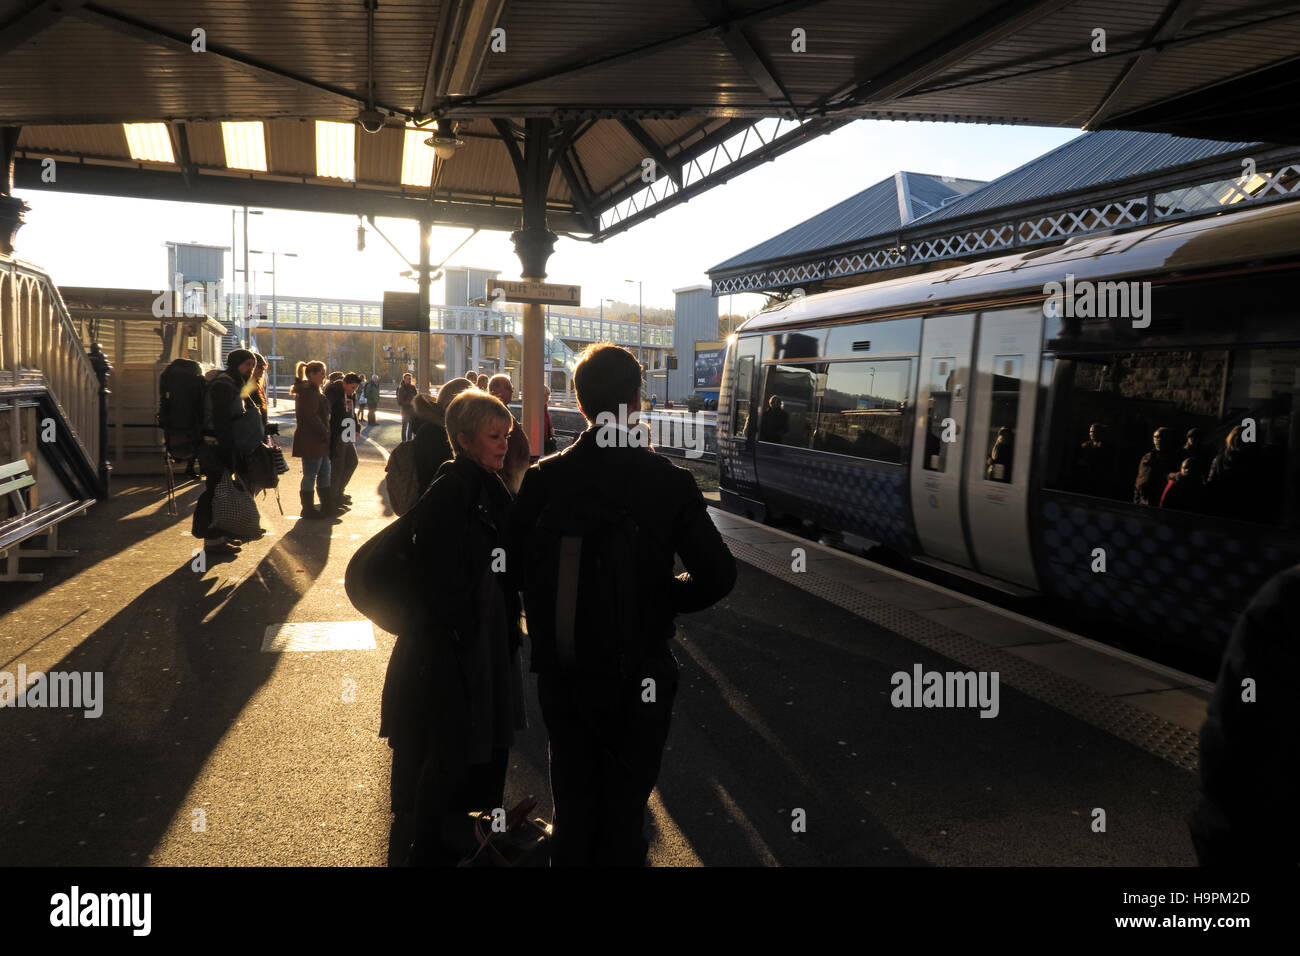 Passengers casting shadows on a railway platform, Perth,Scotland,UK Stock Photo